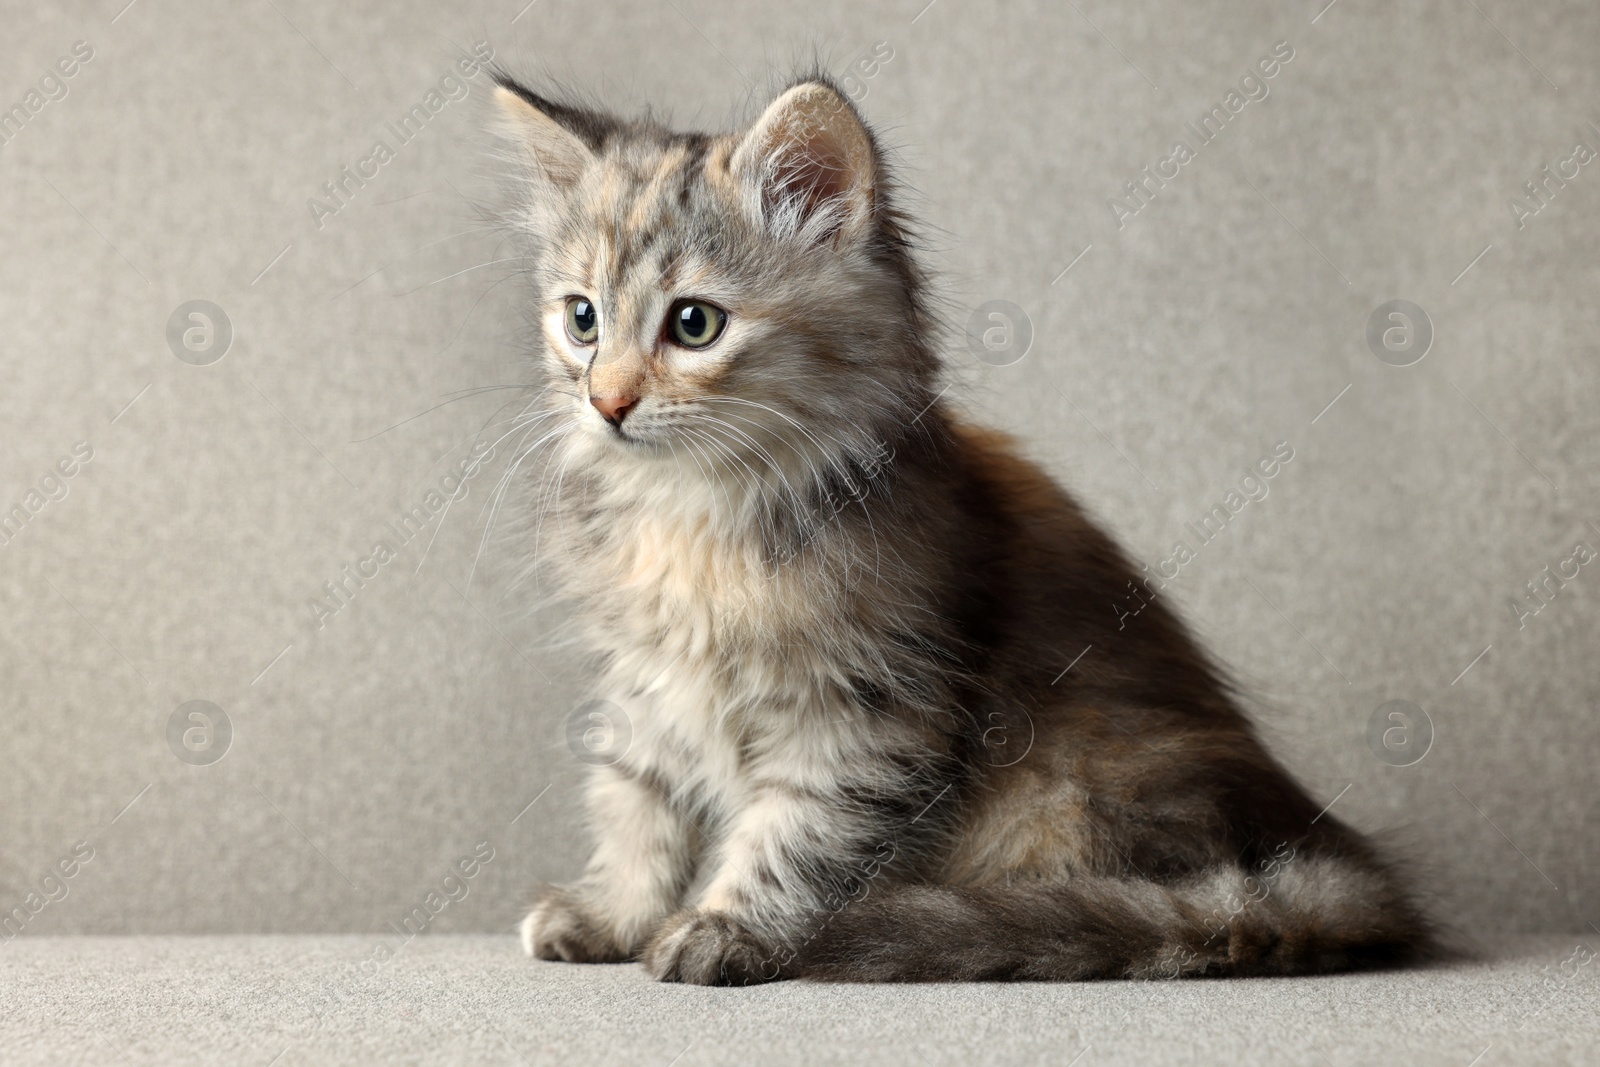 Photo of Cute fluffy kitten on grey sofa. Baby animal